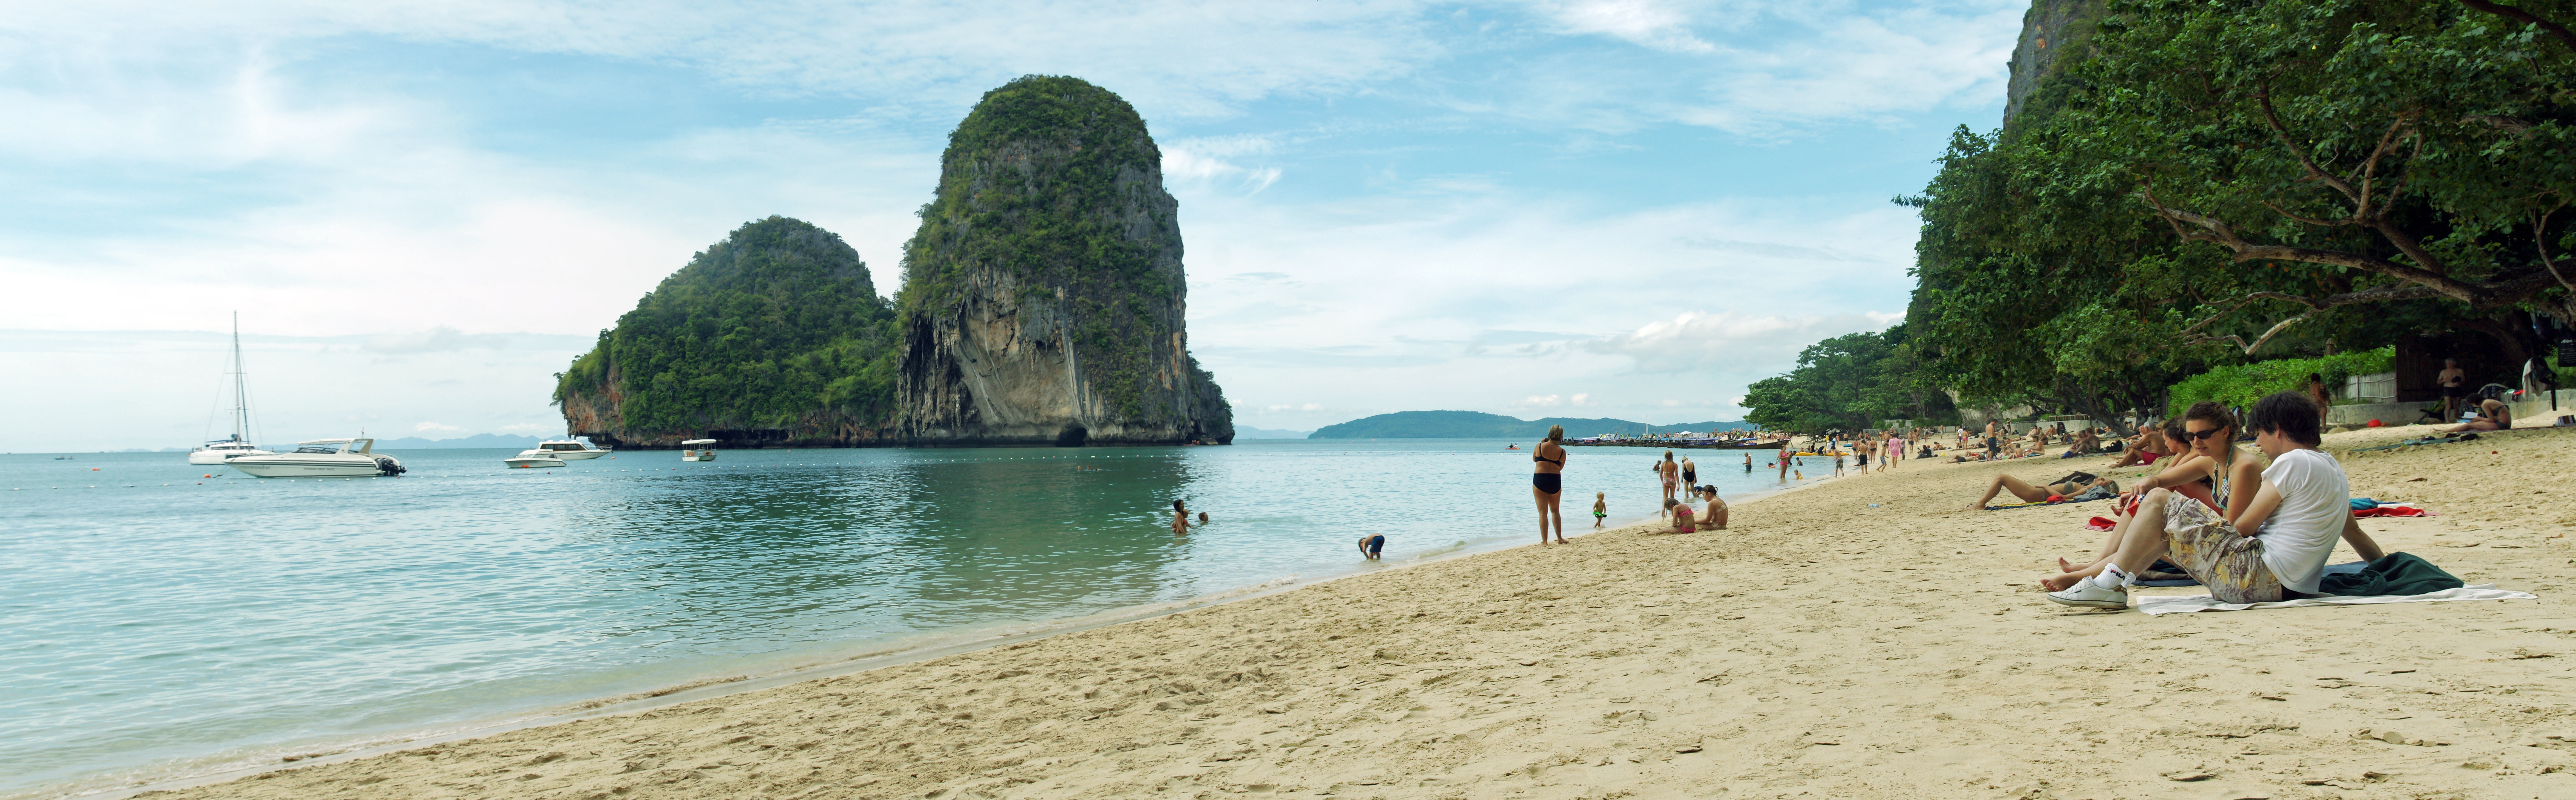 File:Phra Nang beach 24.jpg - Wikimedia Commons